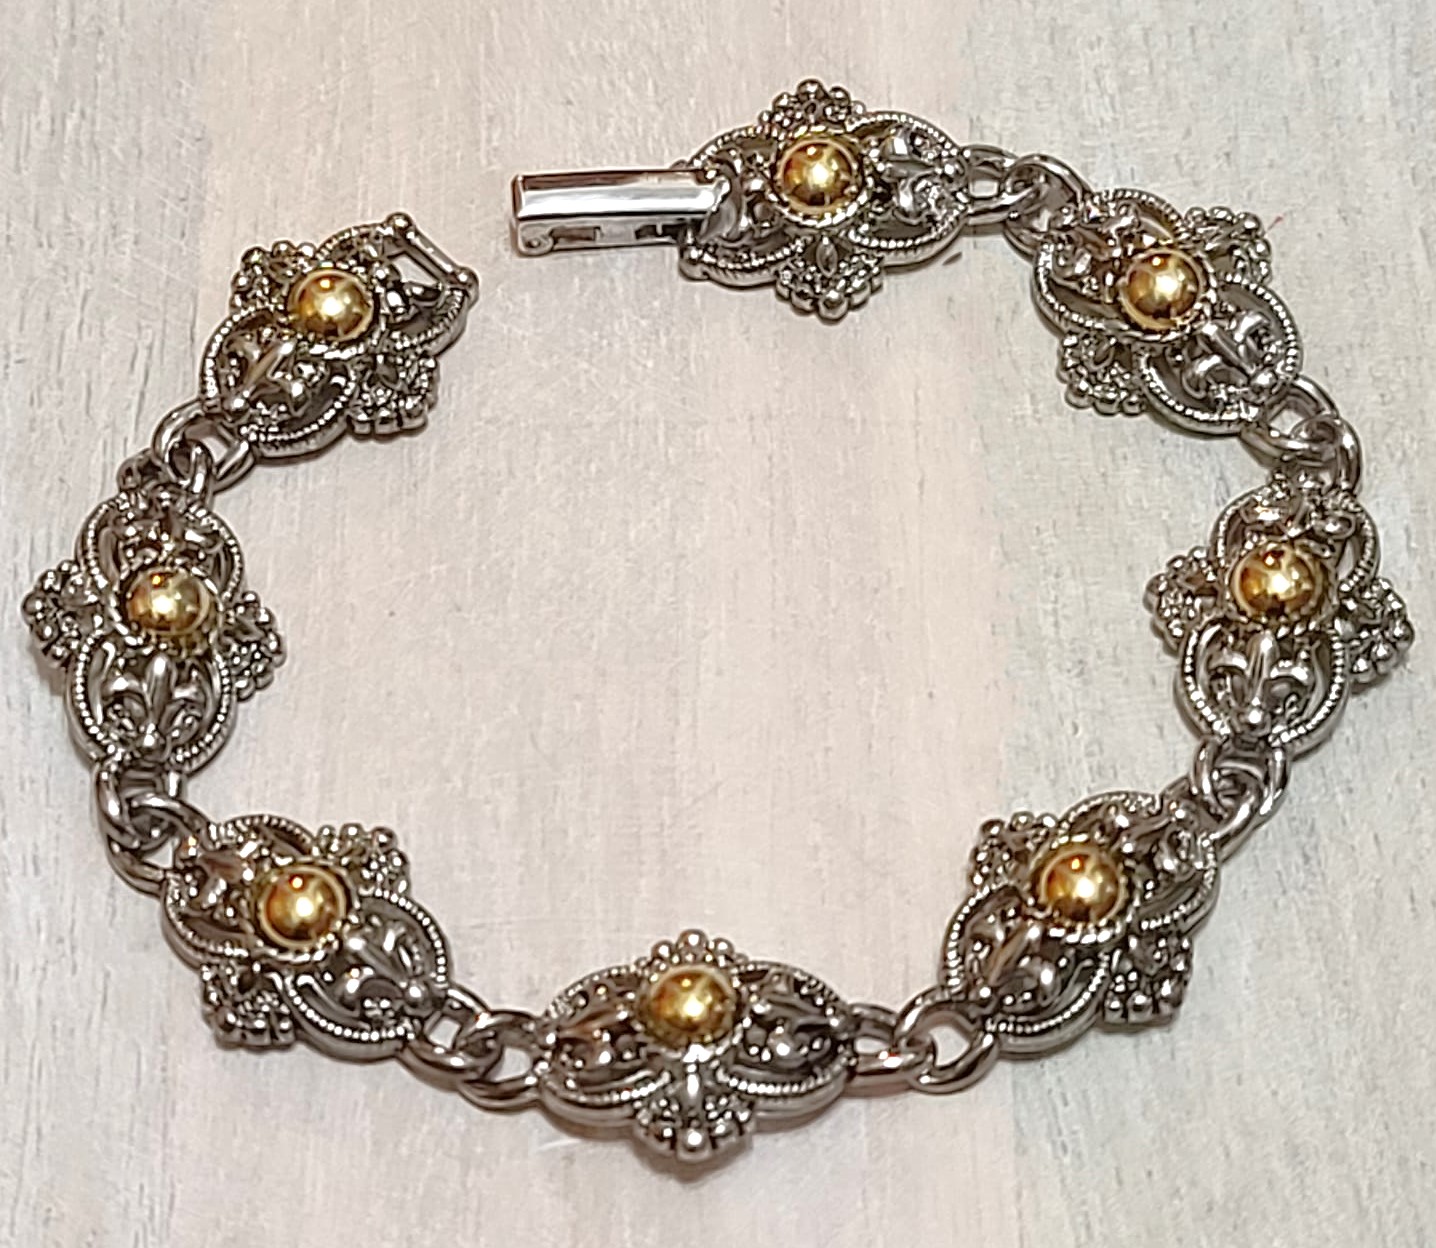 Fiigree bracelet, by Park Lane Jewels, gold and silver combination bracelet, vintage